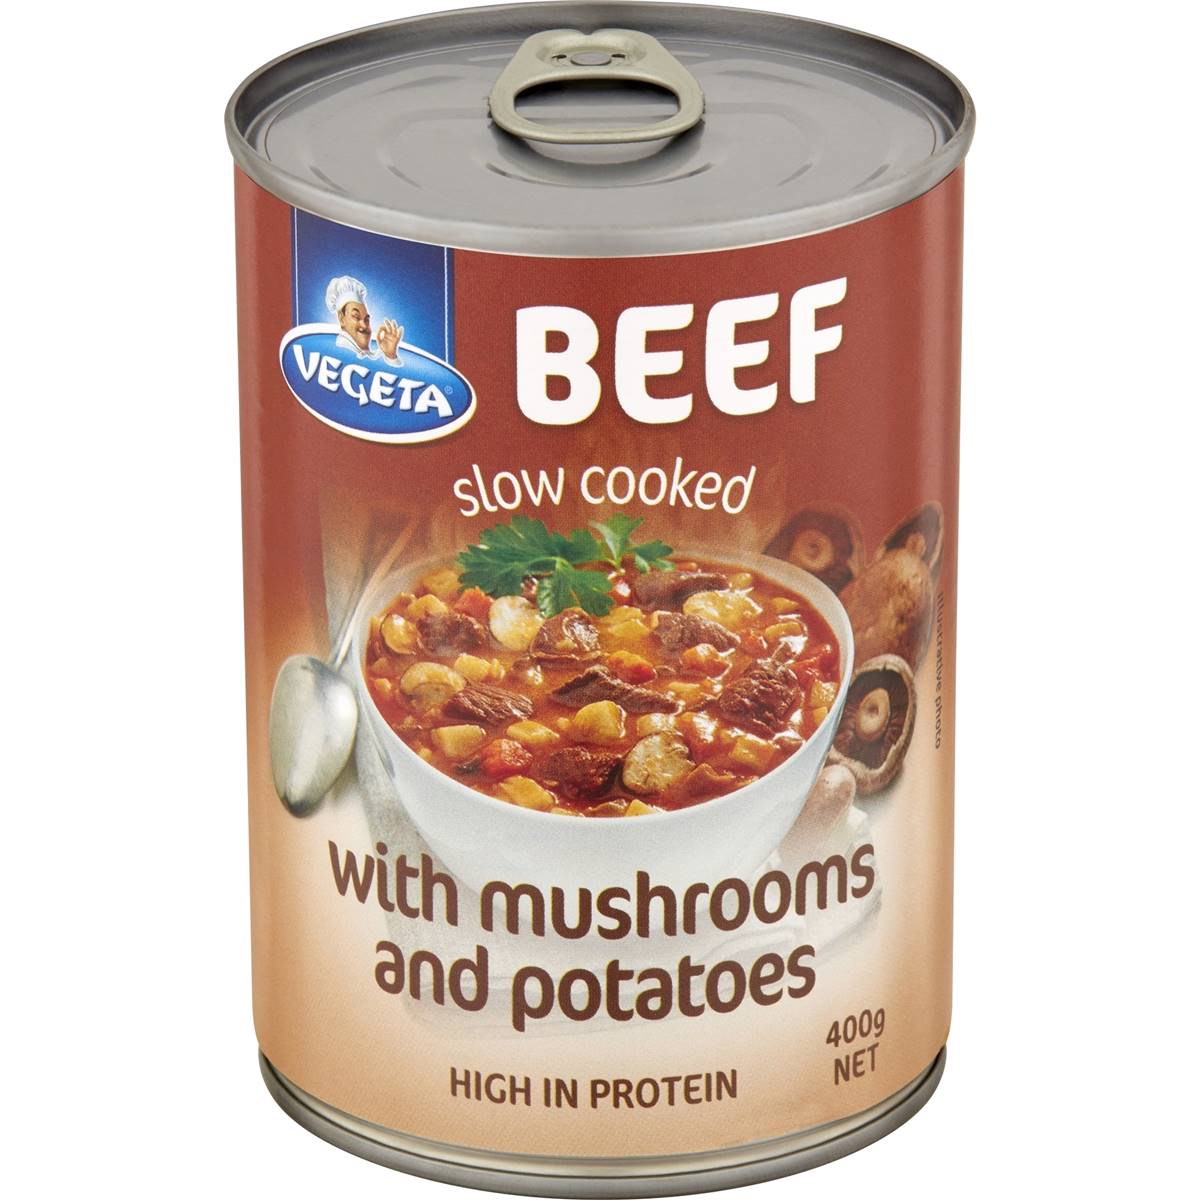 Calories in Vegeta Beef Slow Cooked With Mushrooms & Potatoes